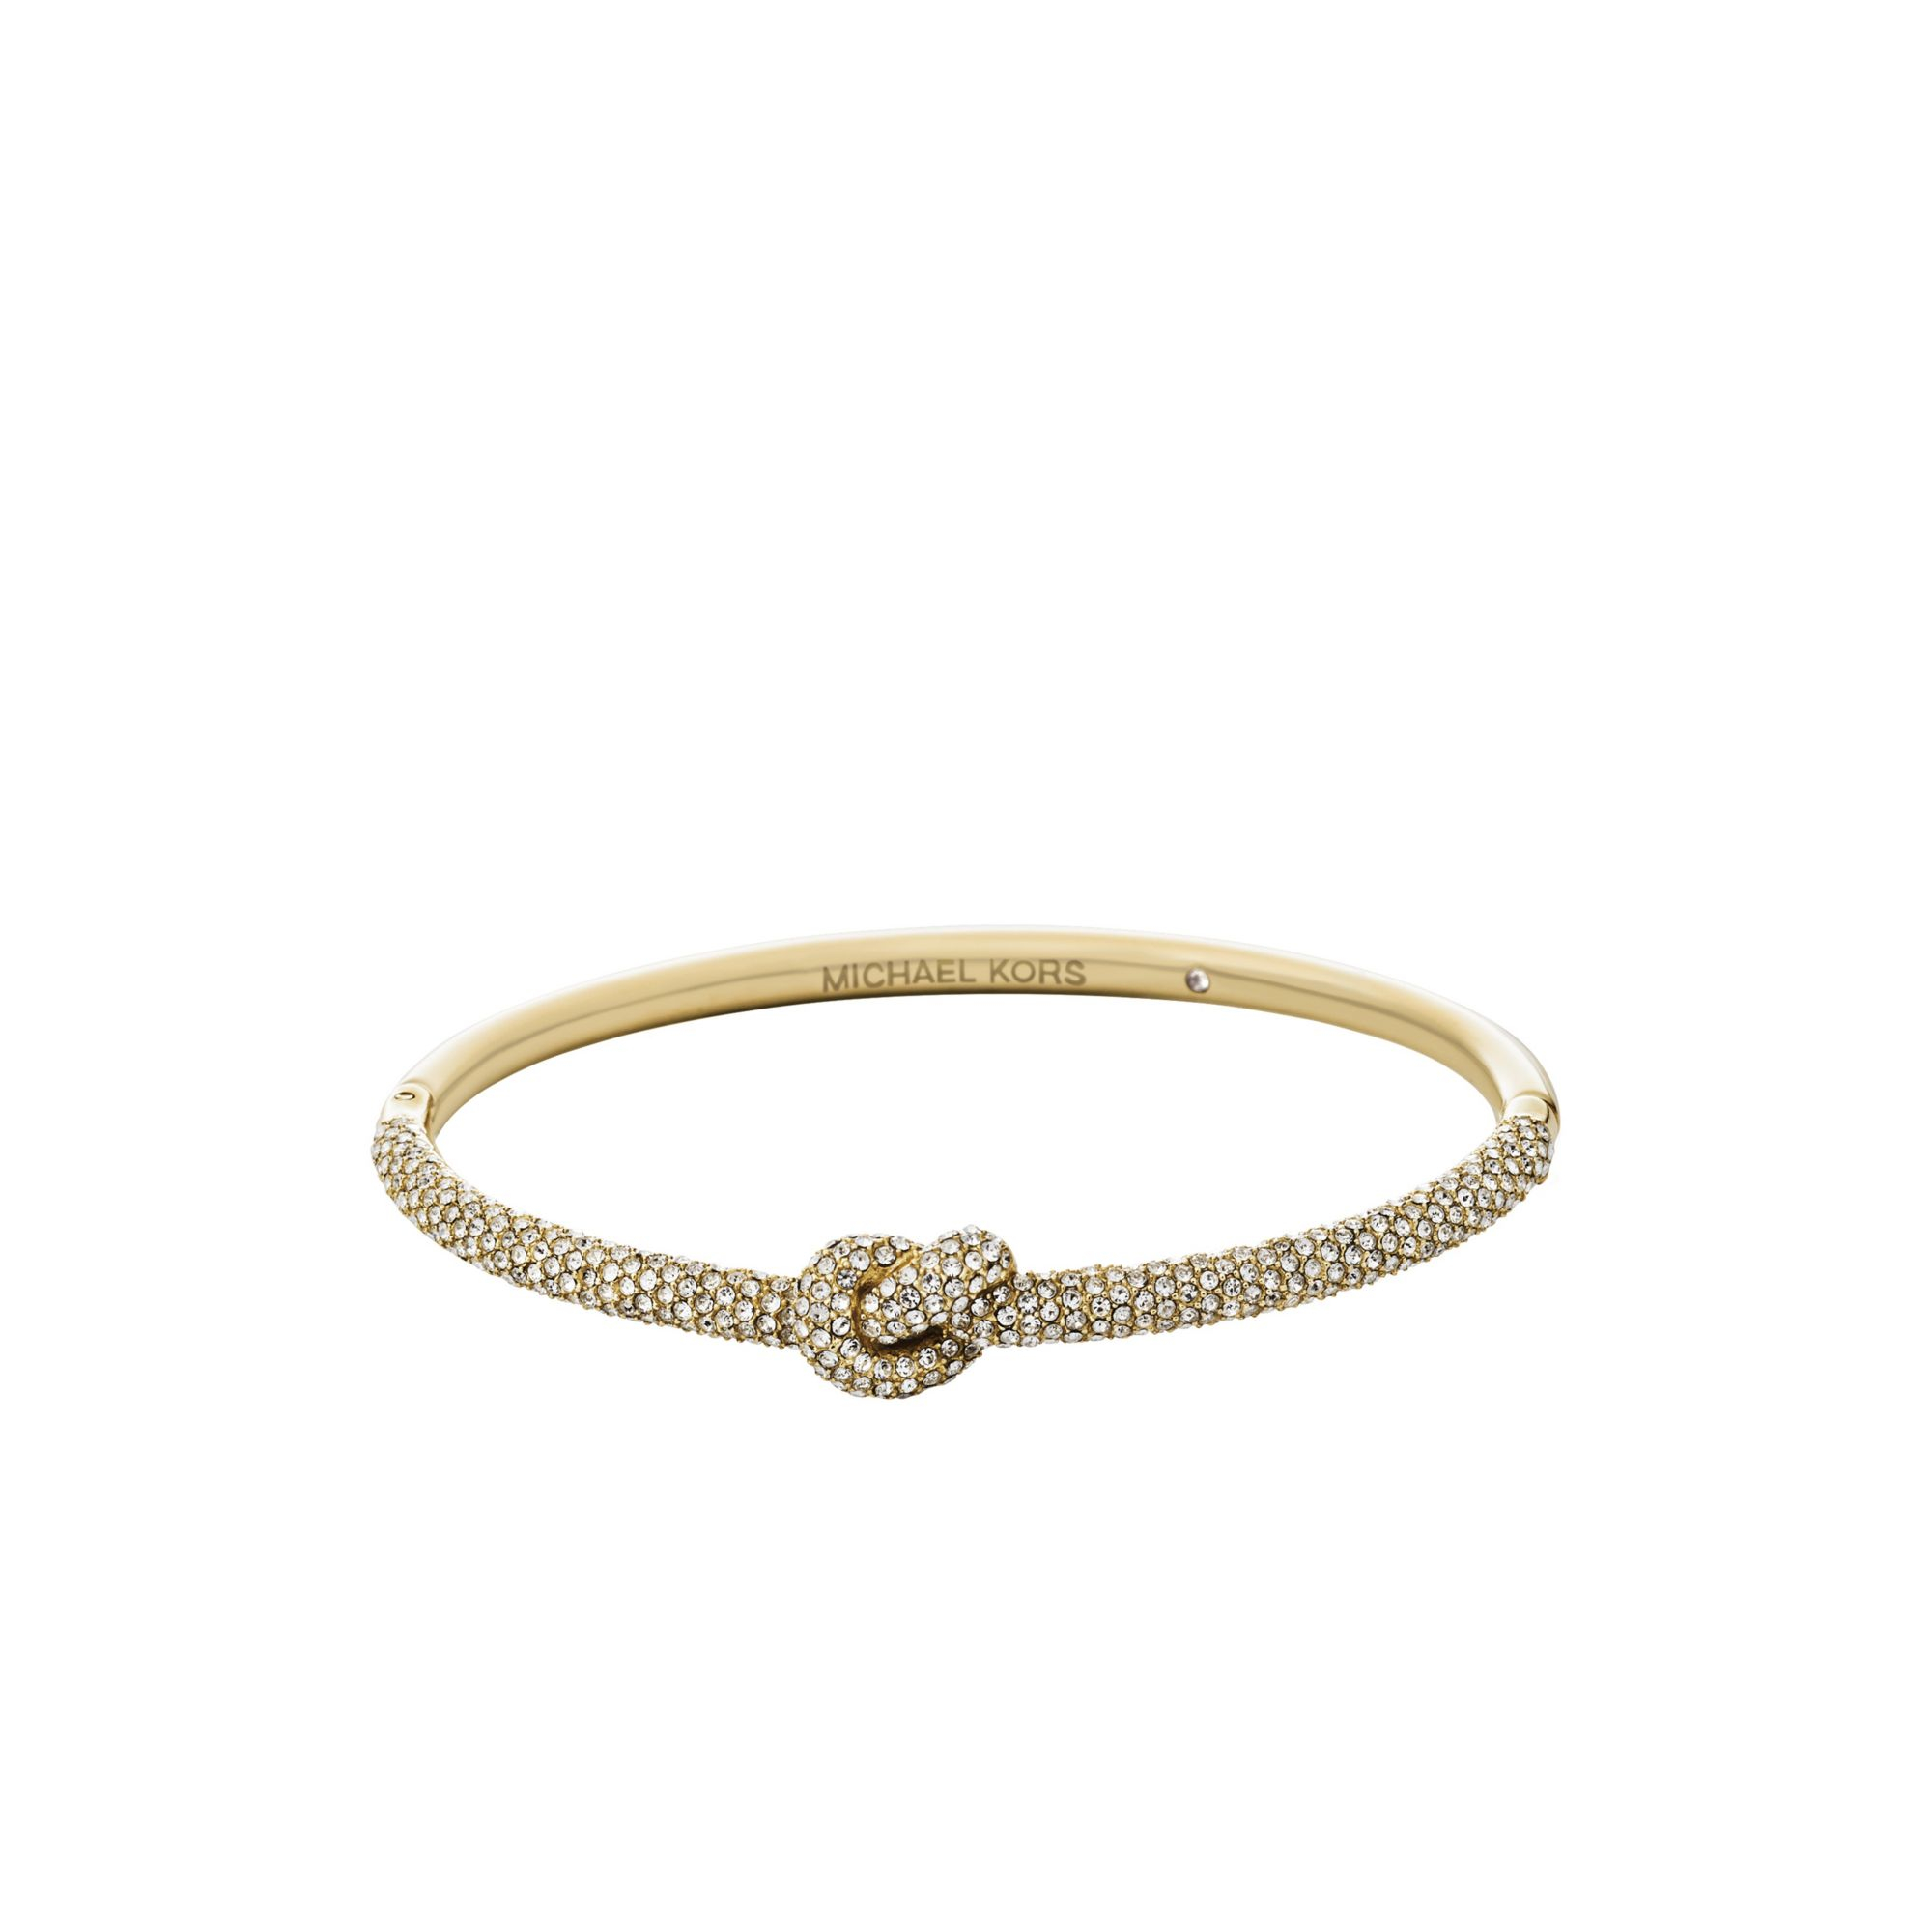 Michael Kors Pavé Gold-tone Knot Bracelet in Metallic - Lyst